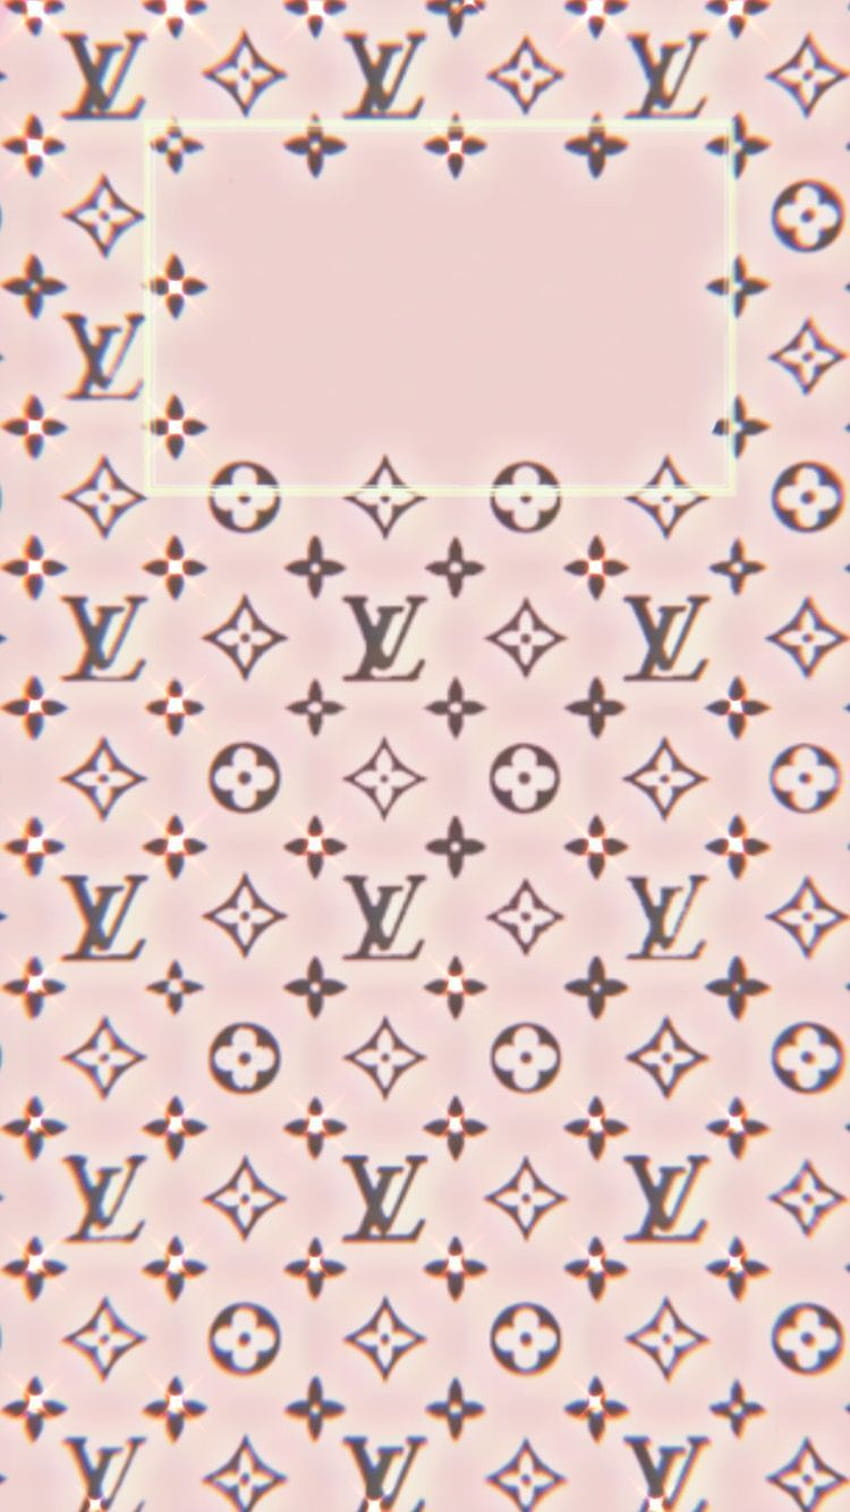 Louis Vuitton Wallpaper - iXpap